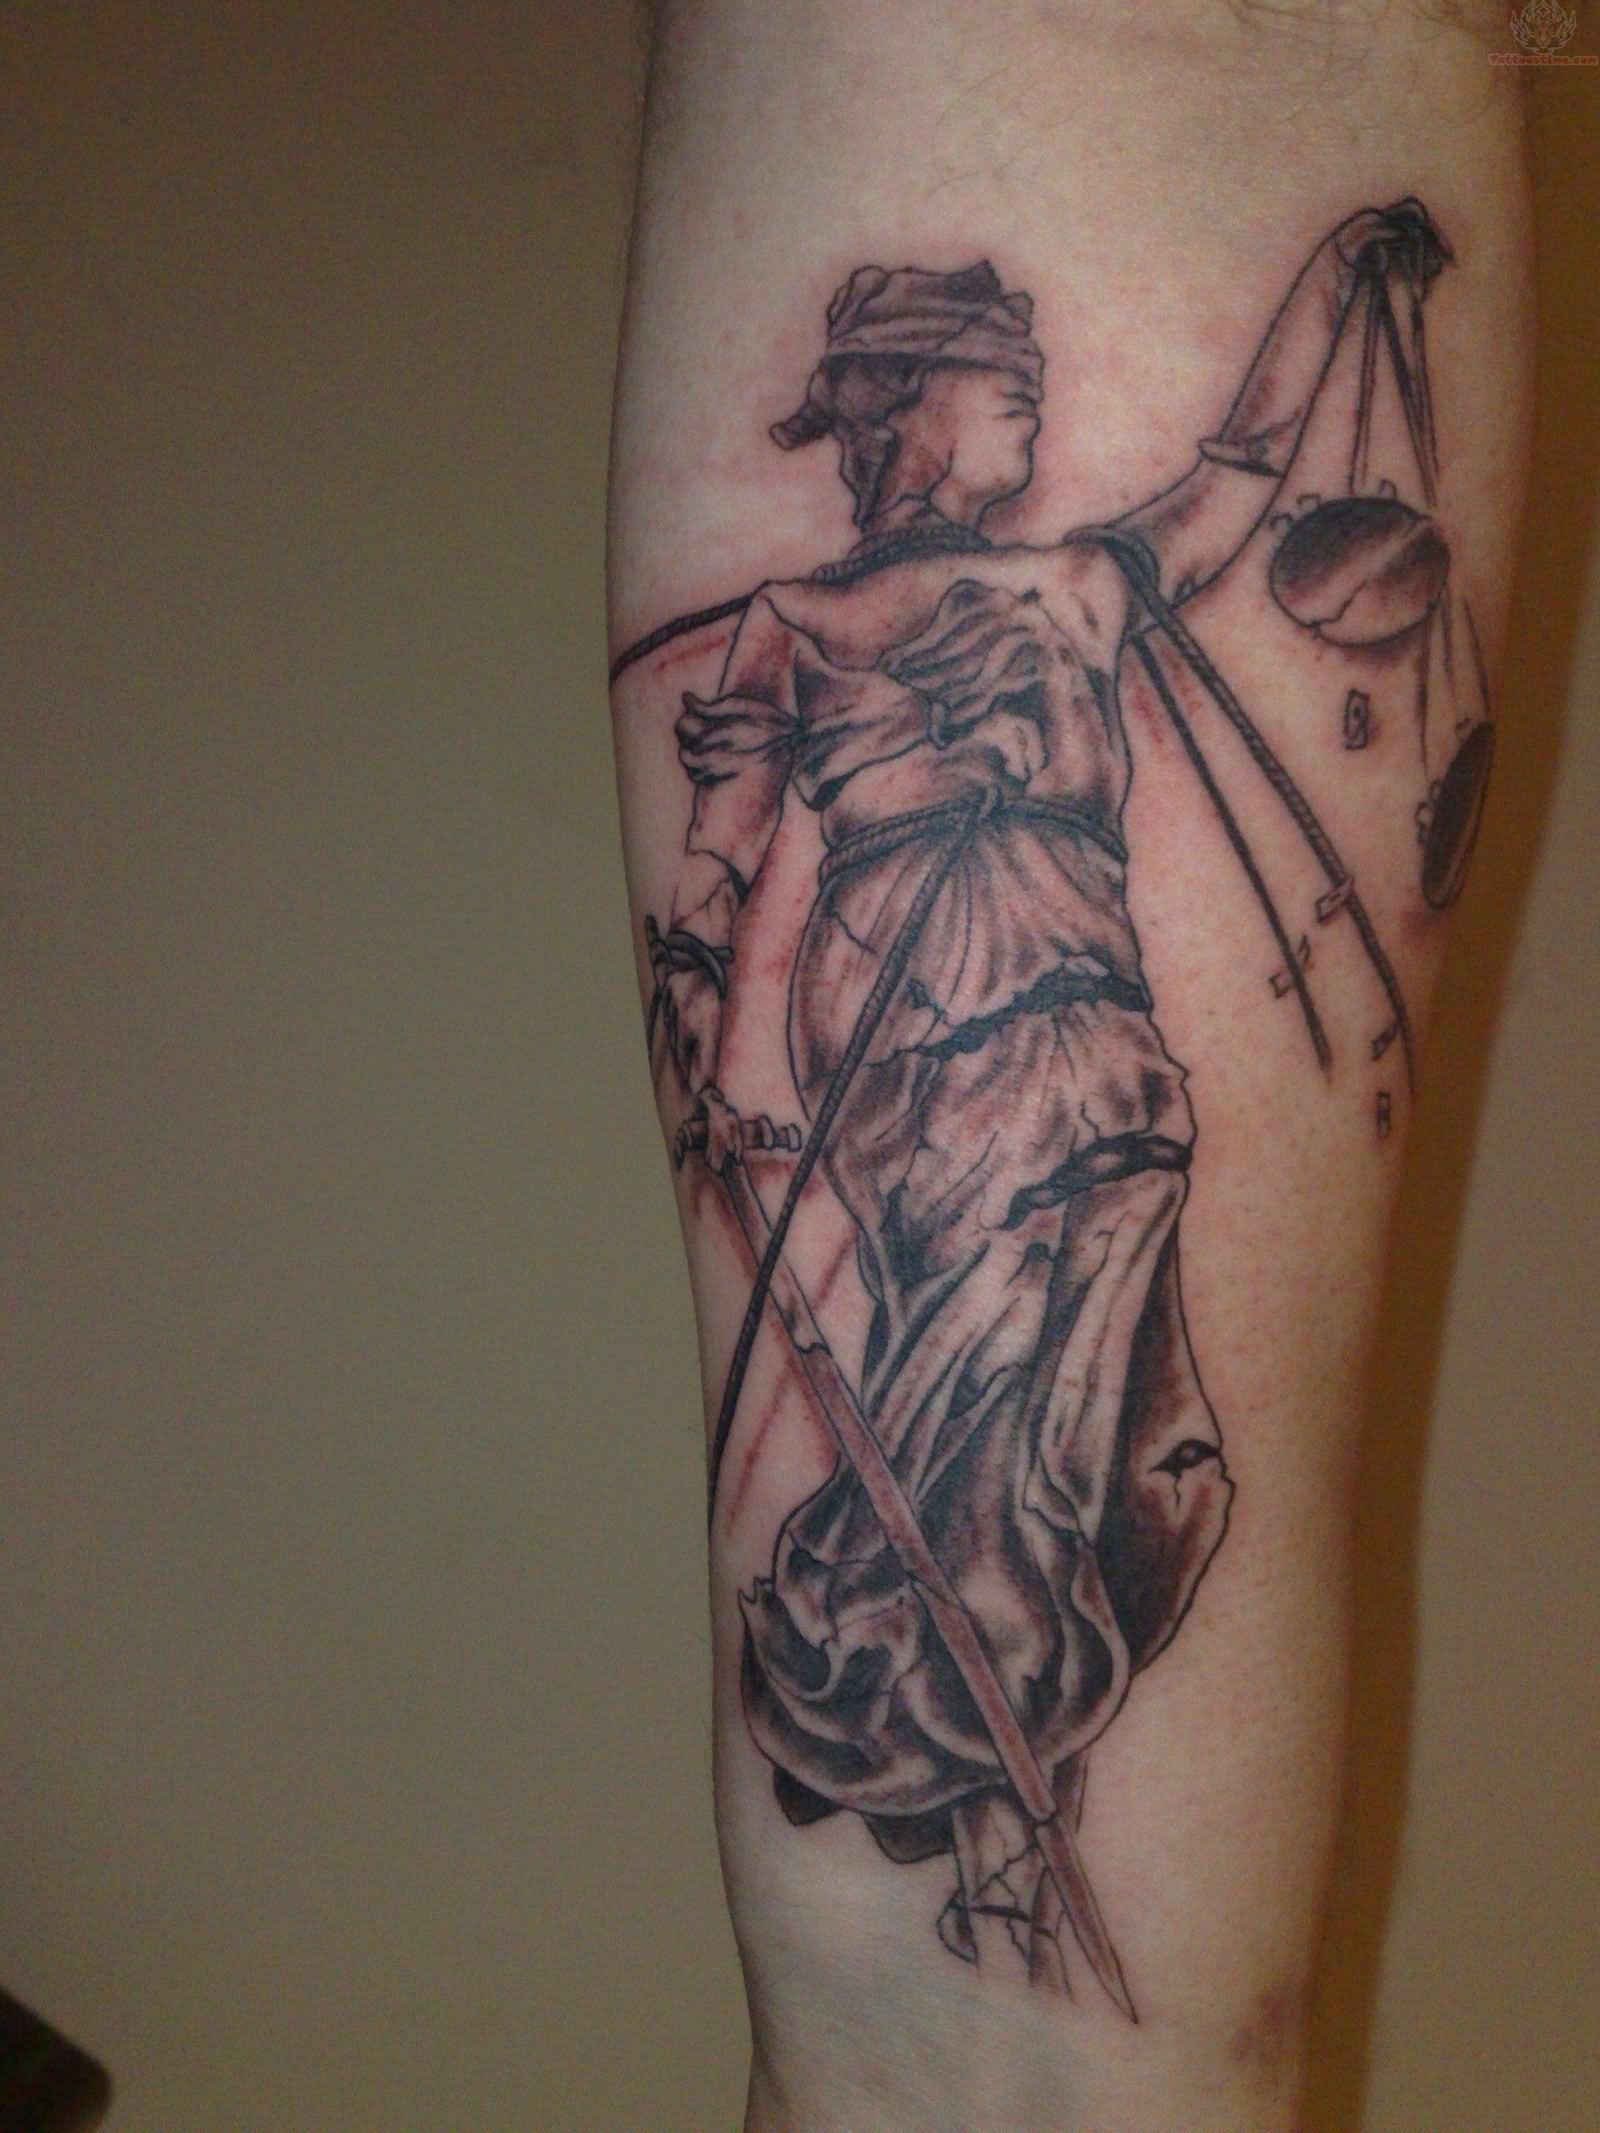 Black Ink Justice Tattoo Design For Arm